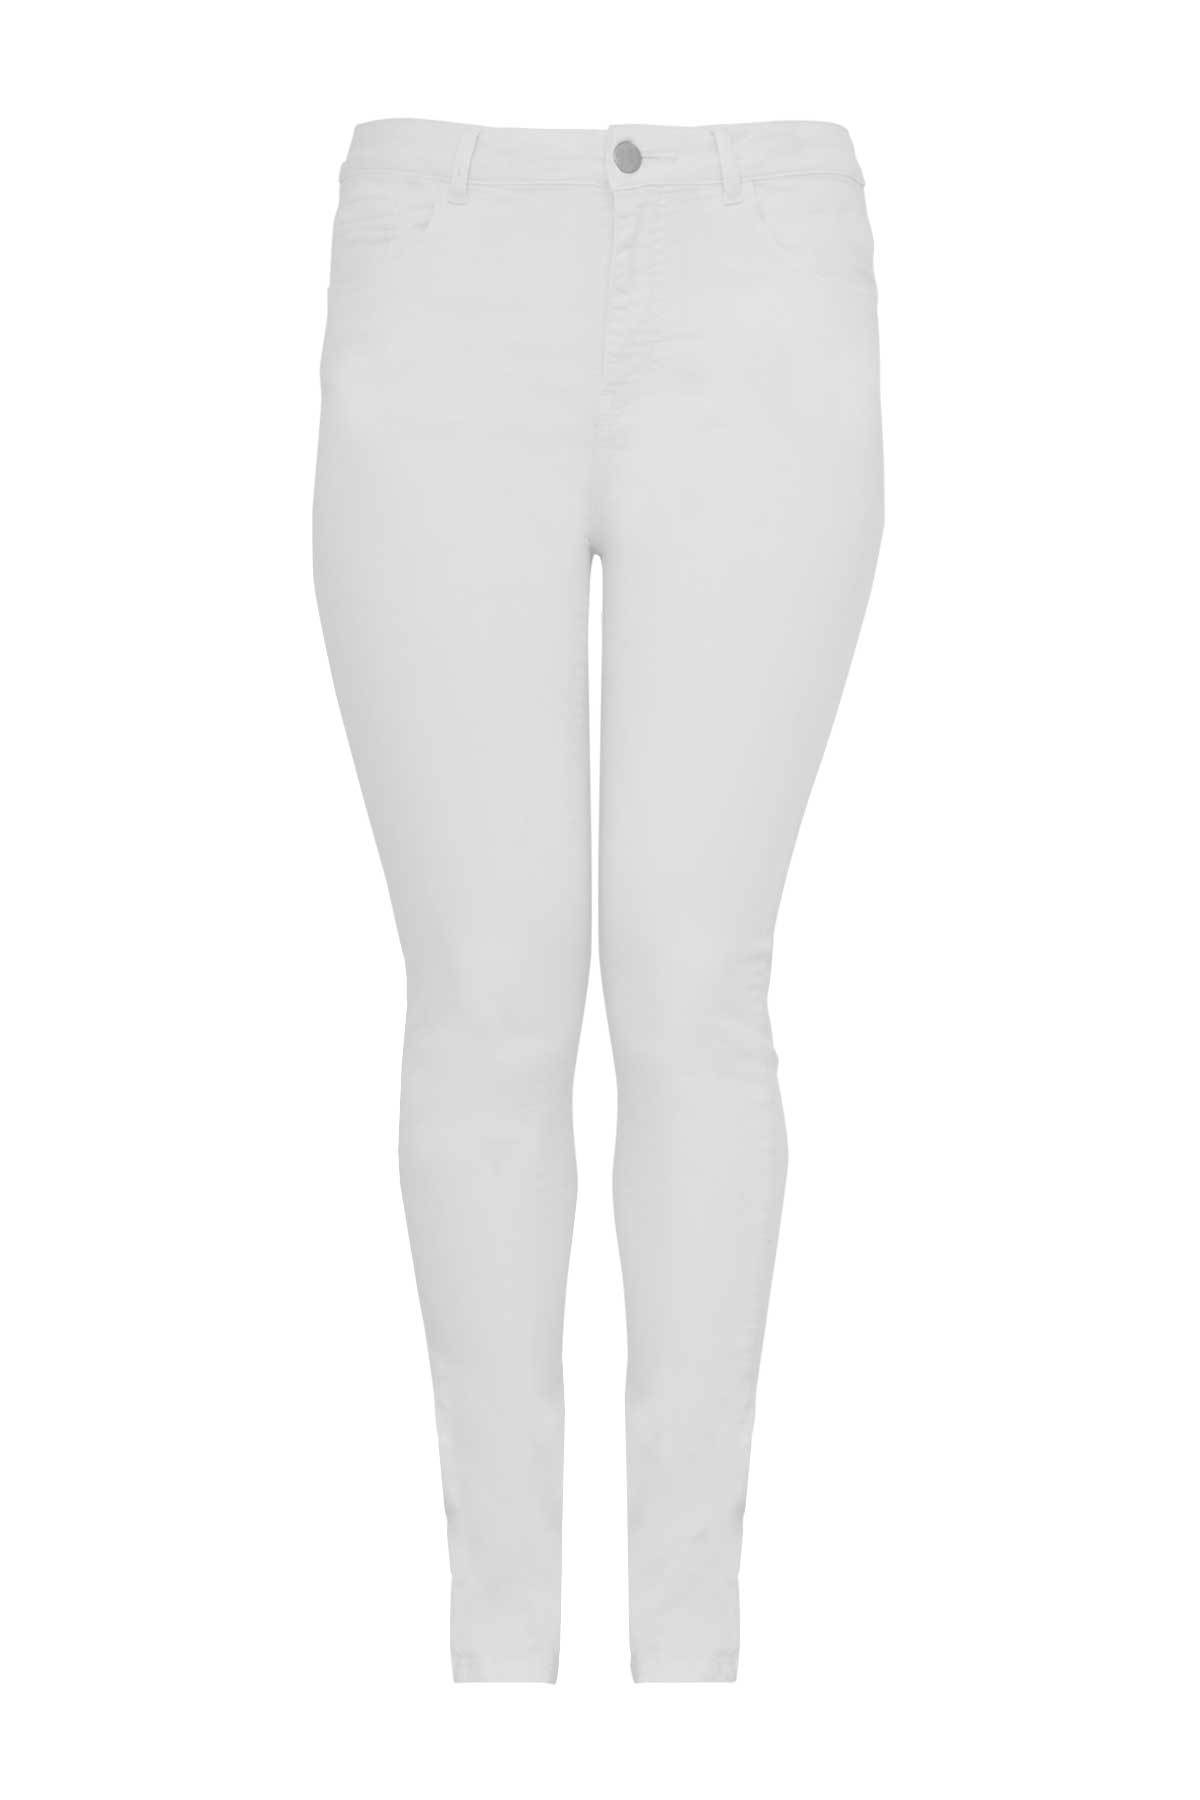 Yoek | Jeans 5p skinny blanc